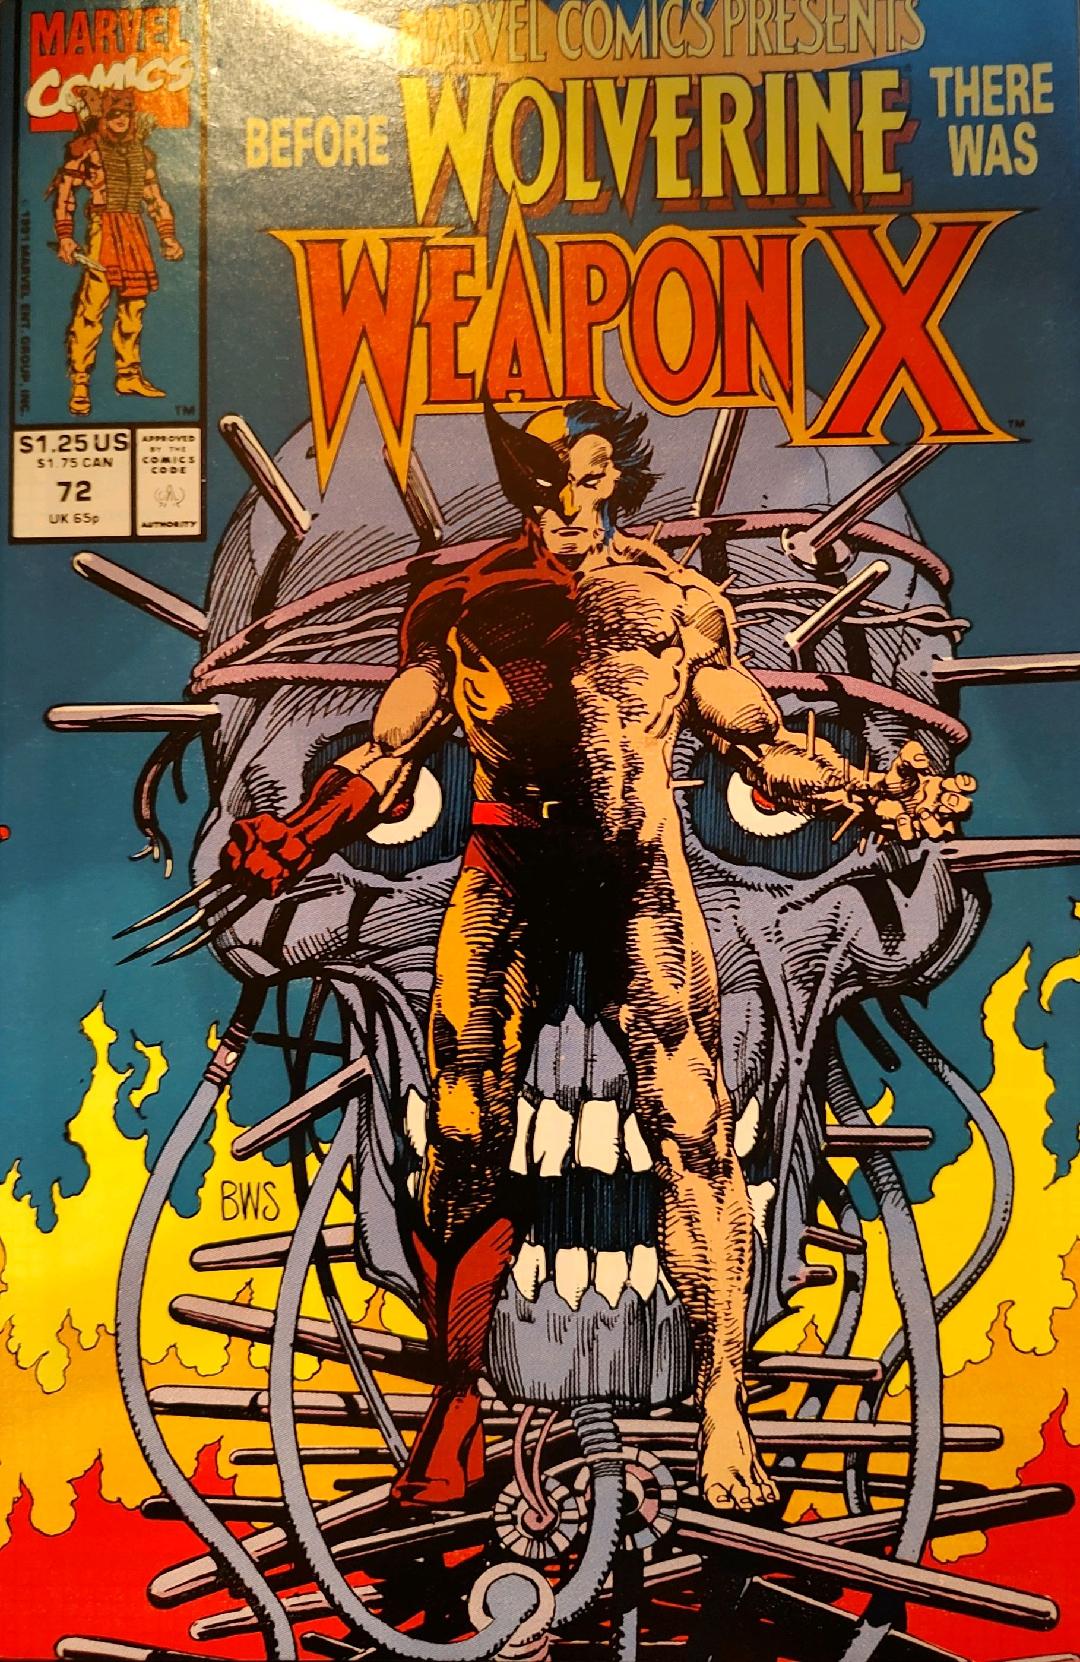 Marvel Comics Presents #72 Weapon X Comic Book Cover